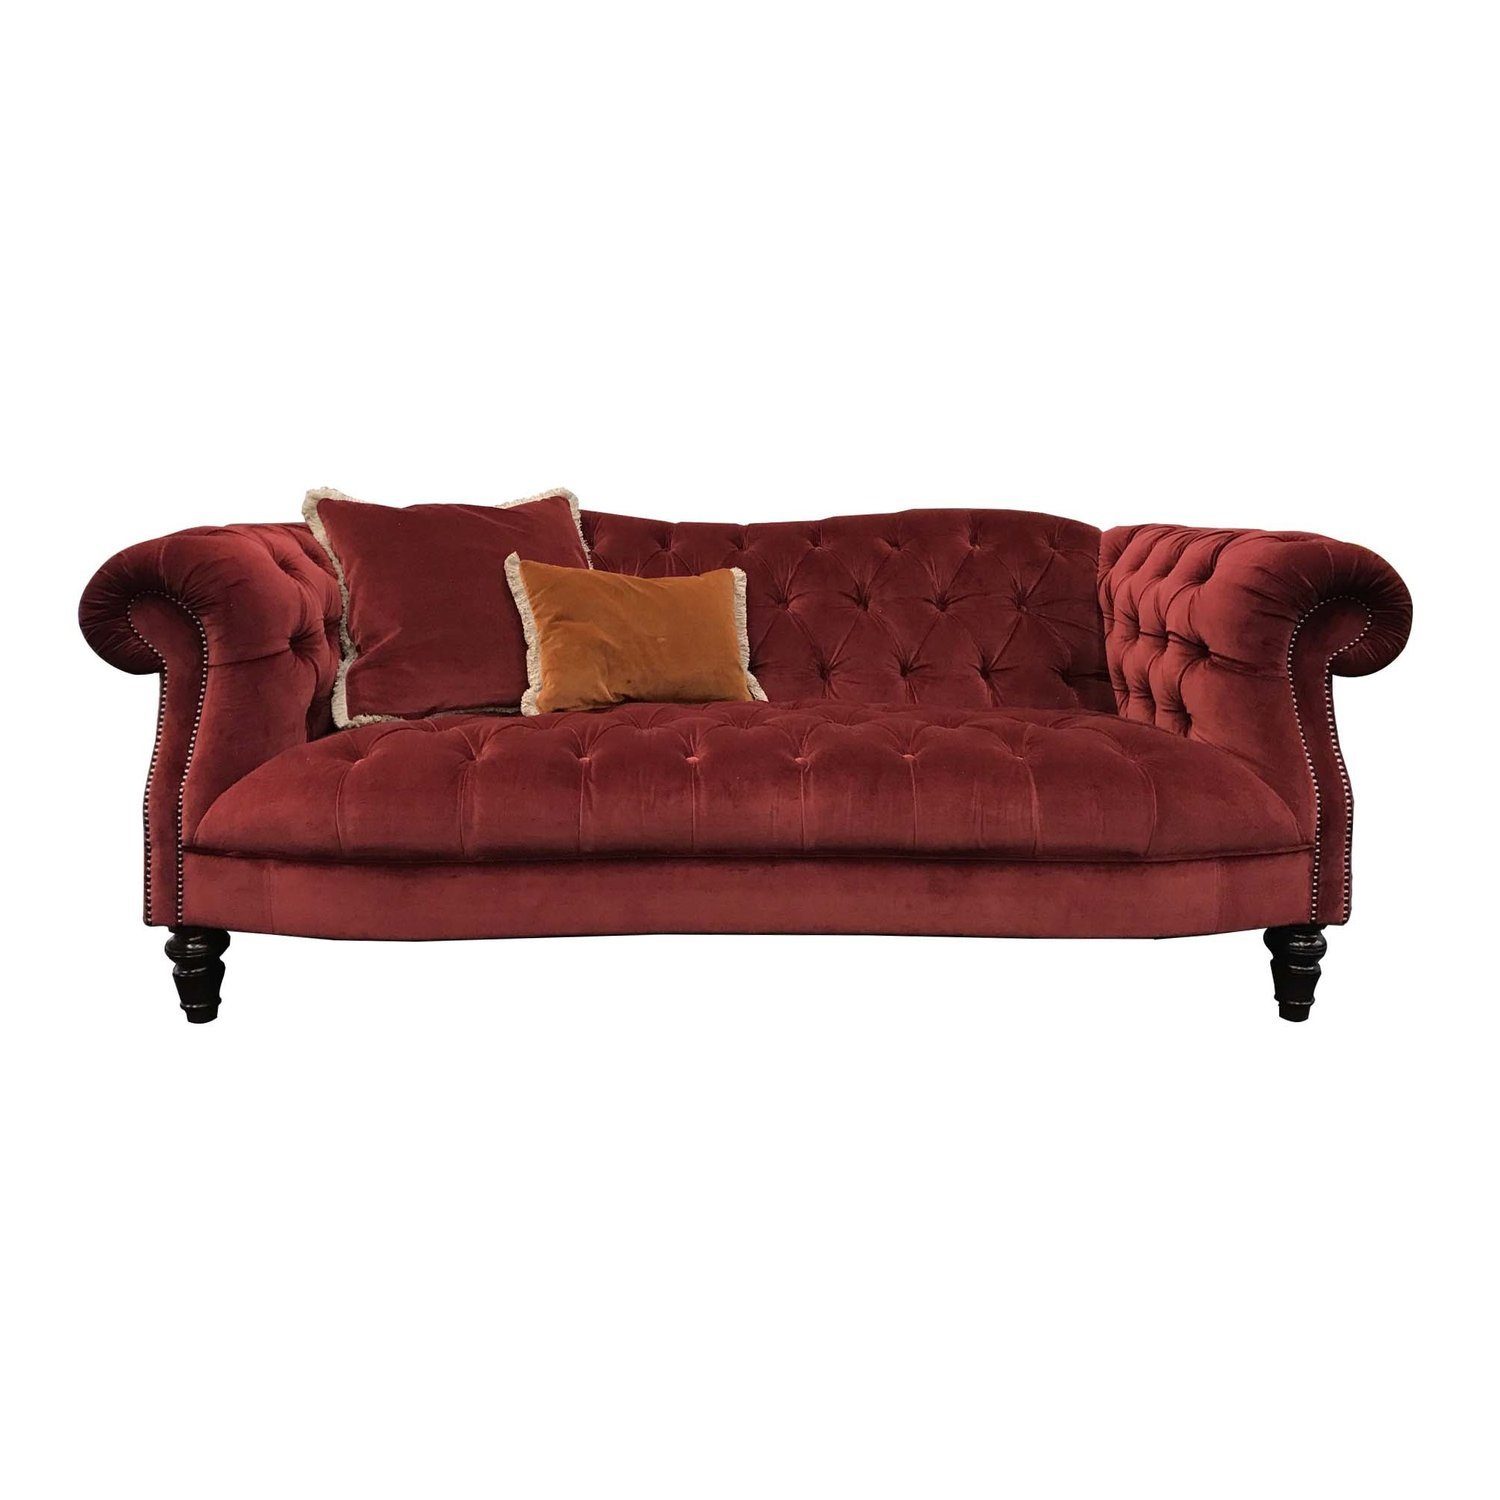 4-Sitzer Sofa Rot 237x99x77cm Natur24 Sofa Grand Kingdom